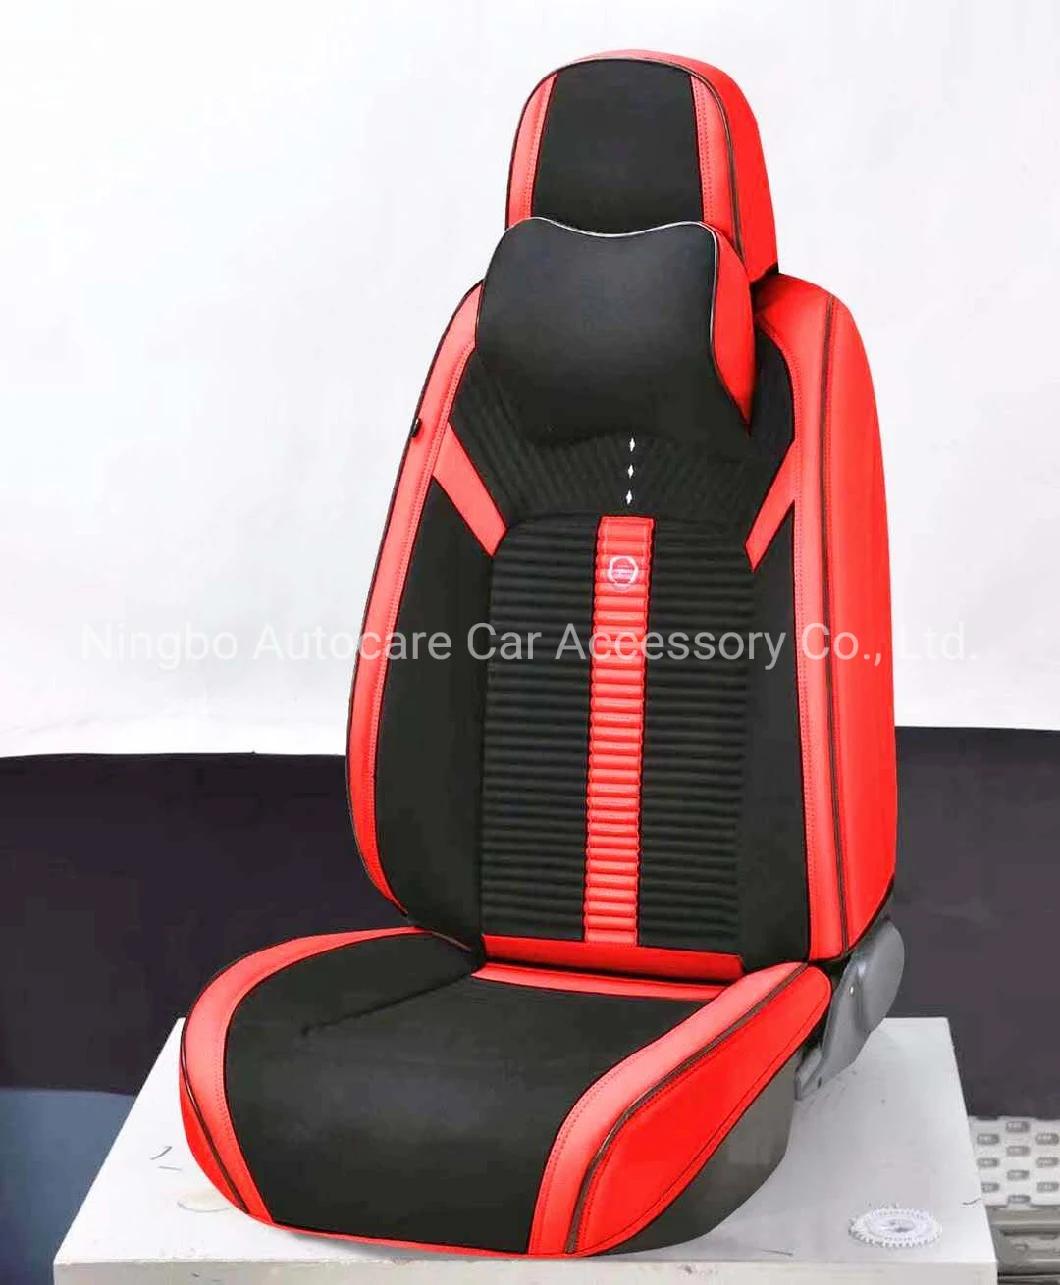 Car Accessories Car Decoration Car Seat Cushion Universal New Fashion PVC Leather Auto 9d Car Seat Cover